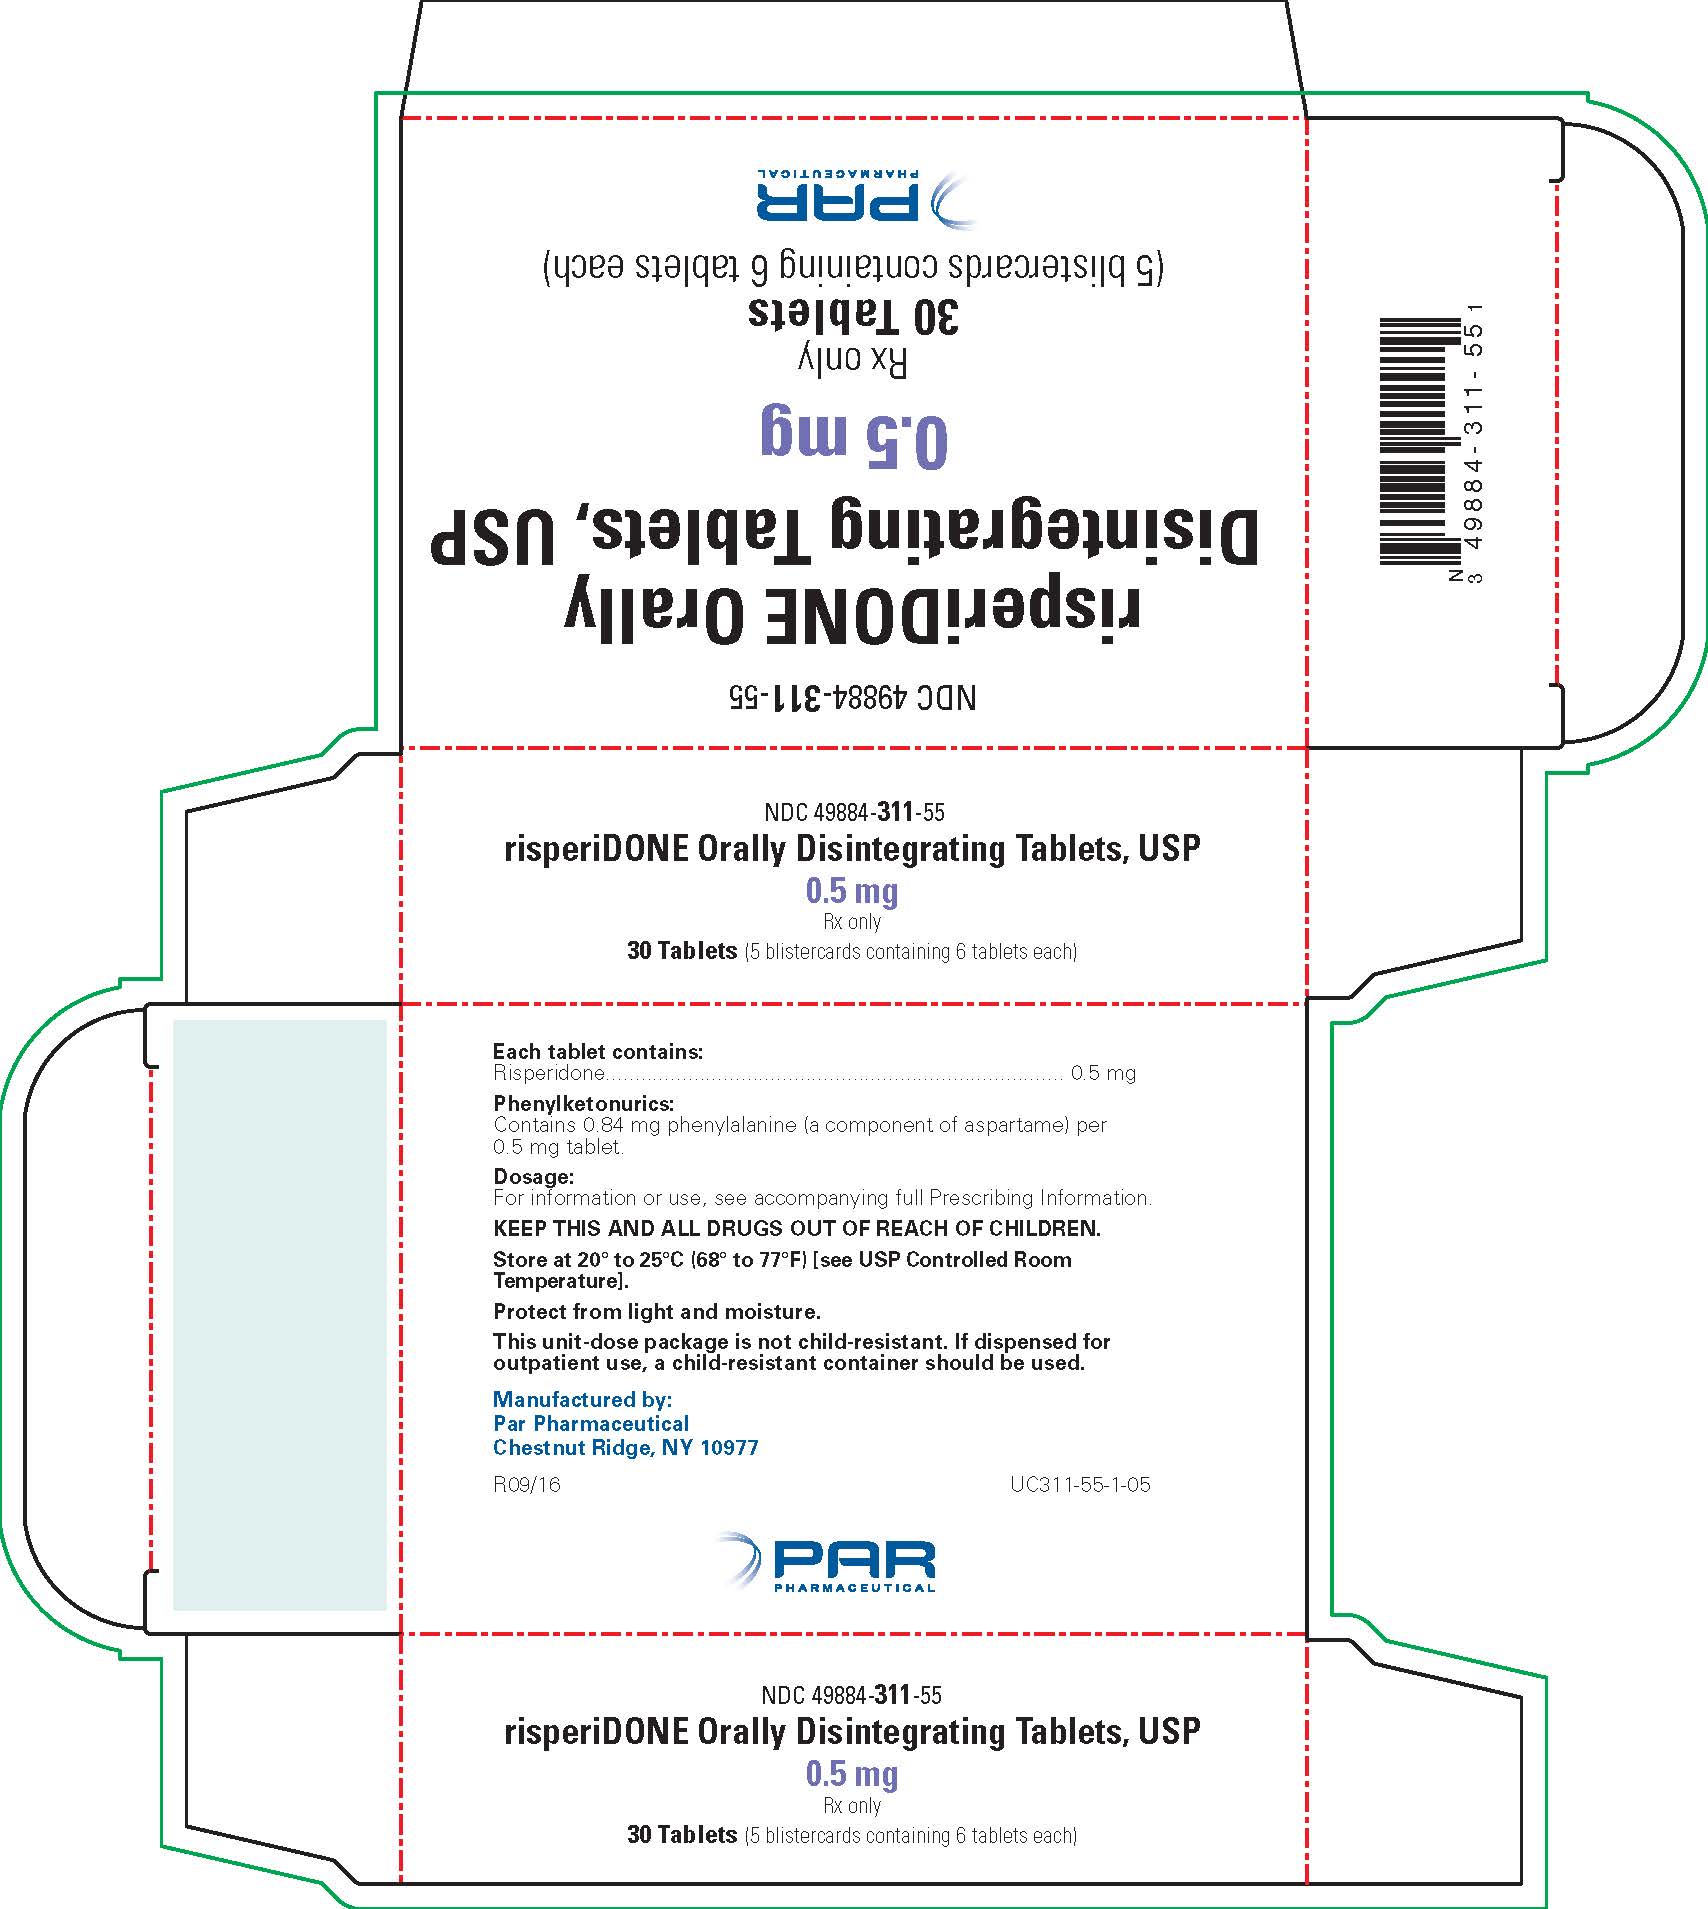 Carton 0.5 mg (30 Tablets)